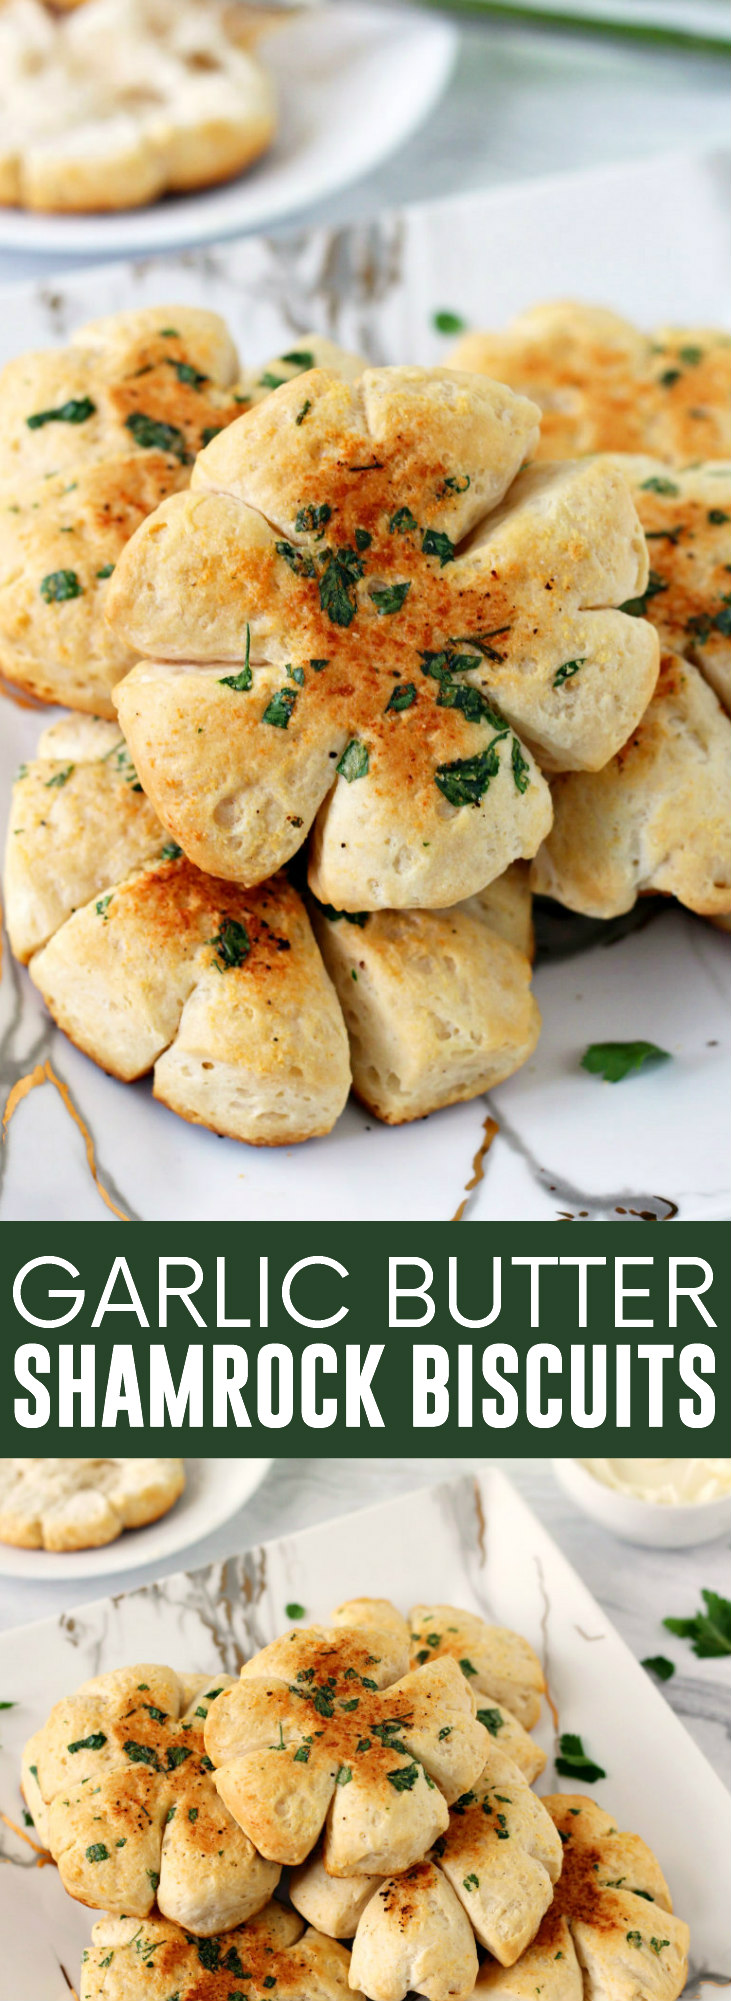 Garlic Butter Shamrock Biscuits pinnable image.